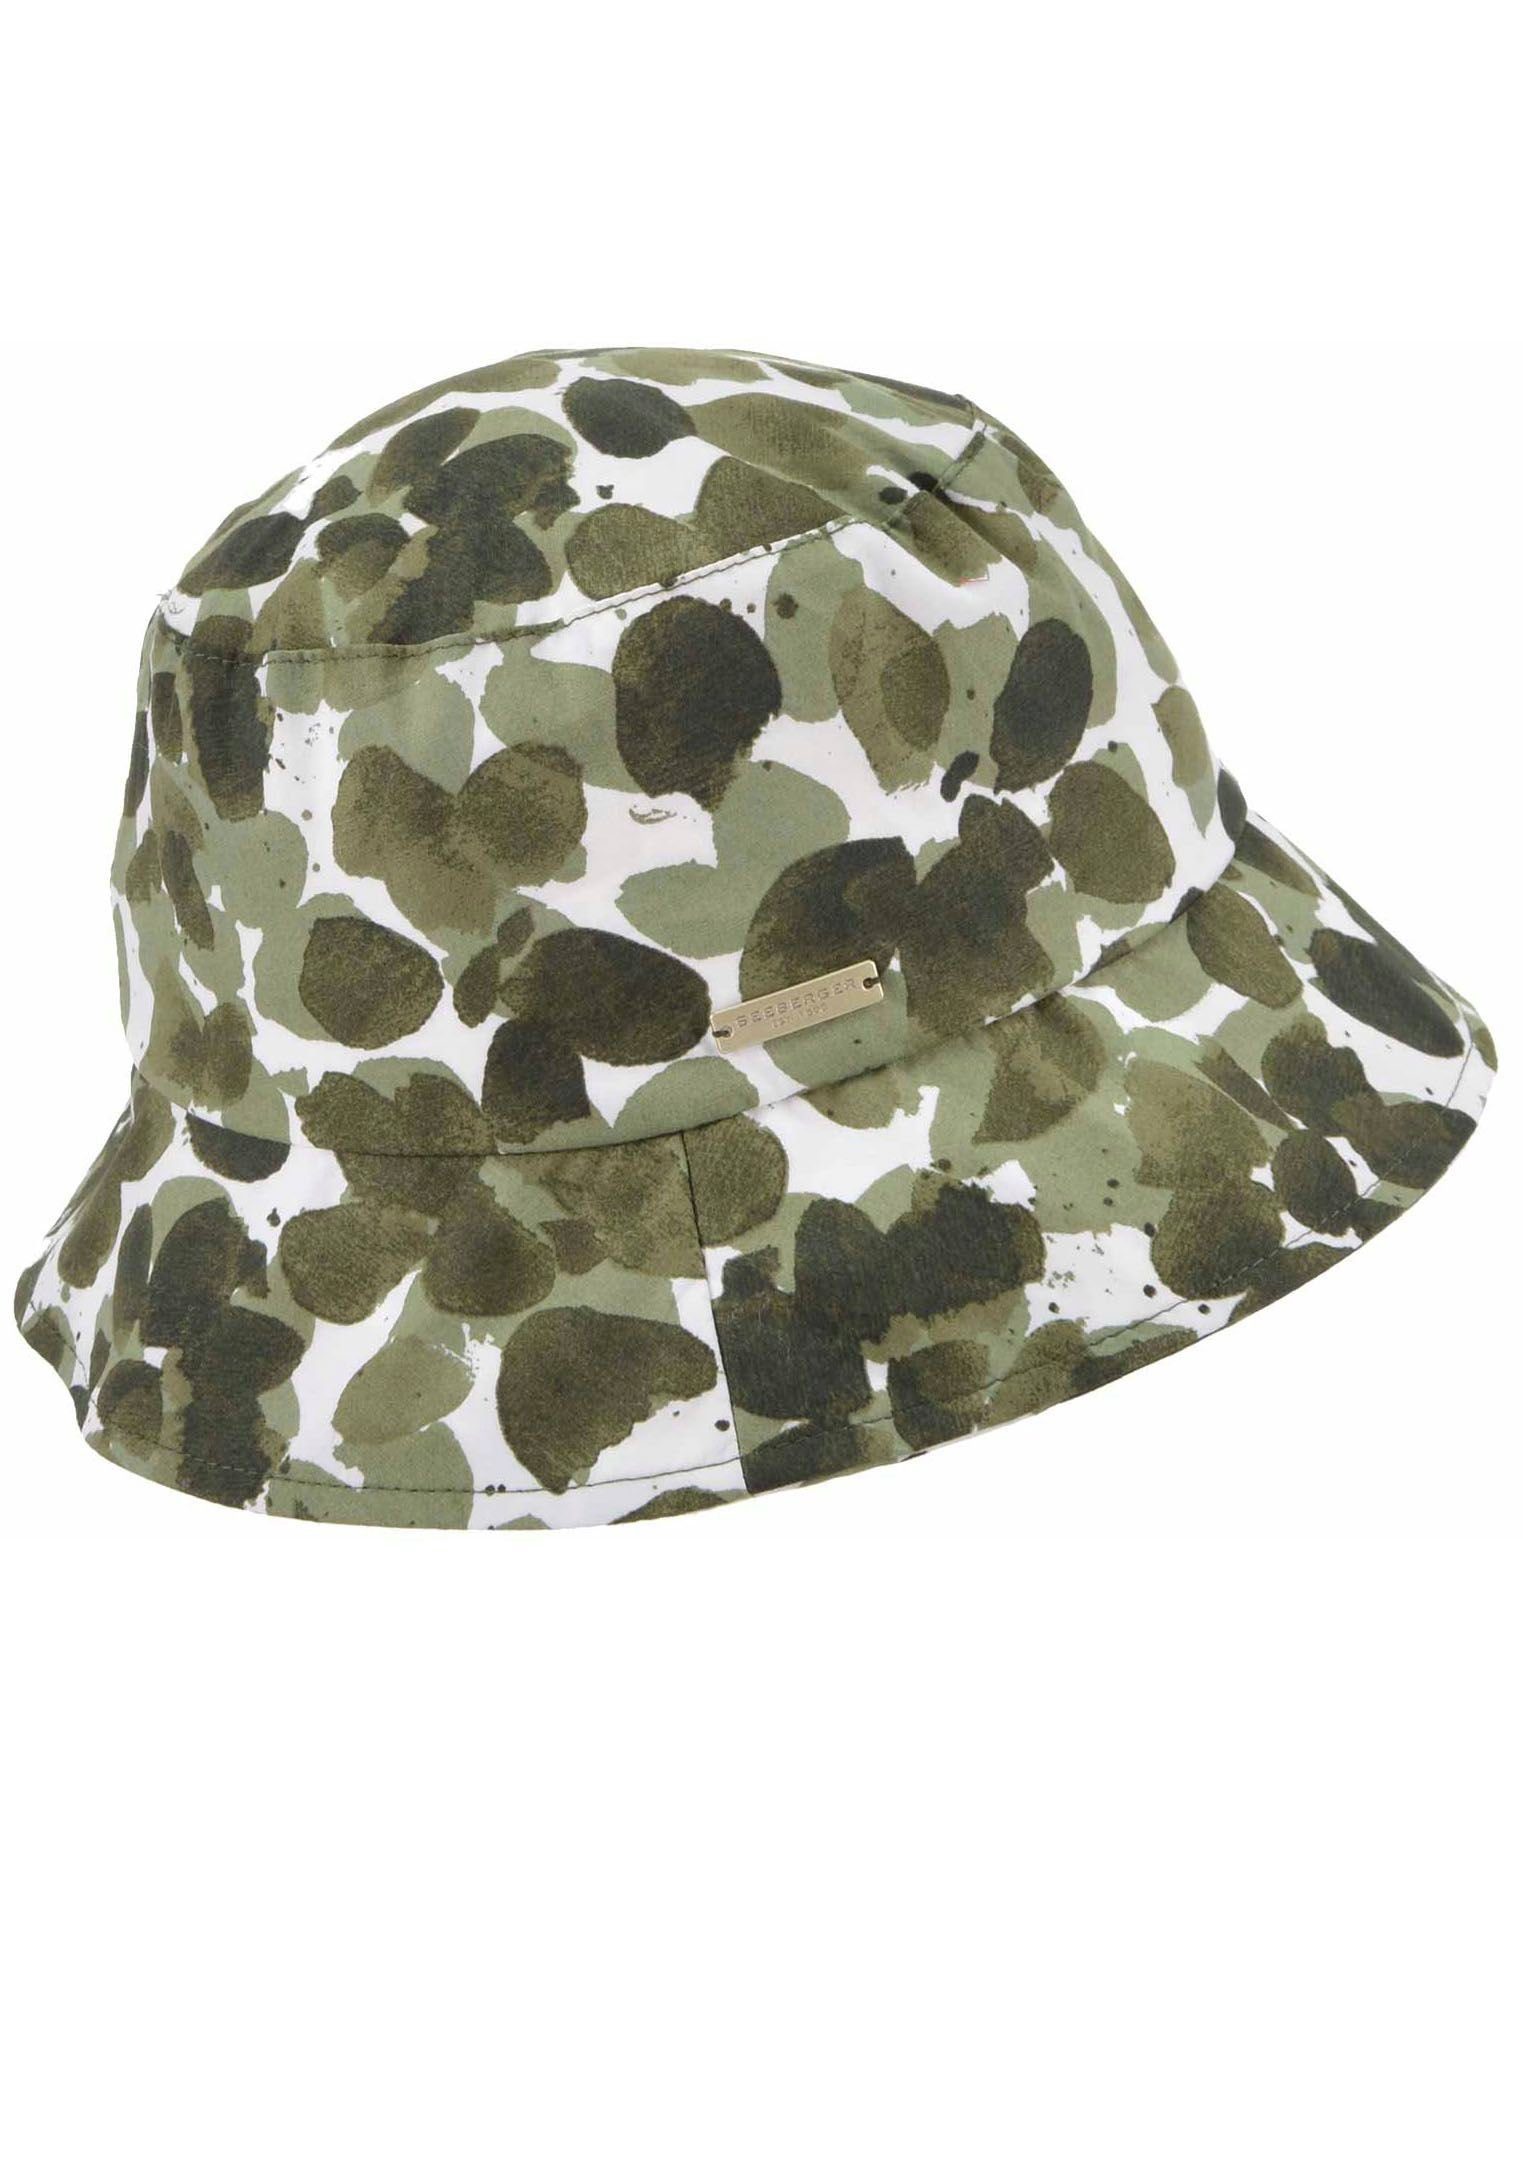 Seeberger Fischerhut Bucket Hat